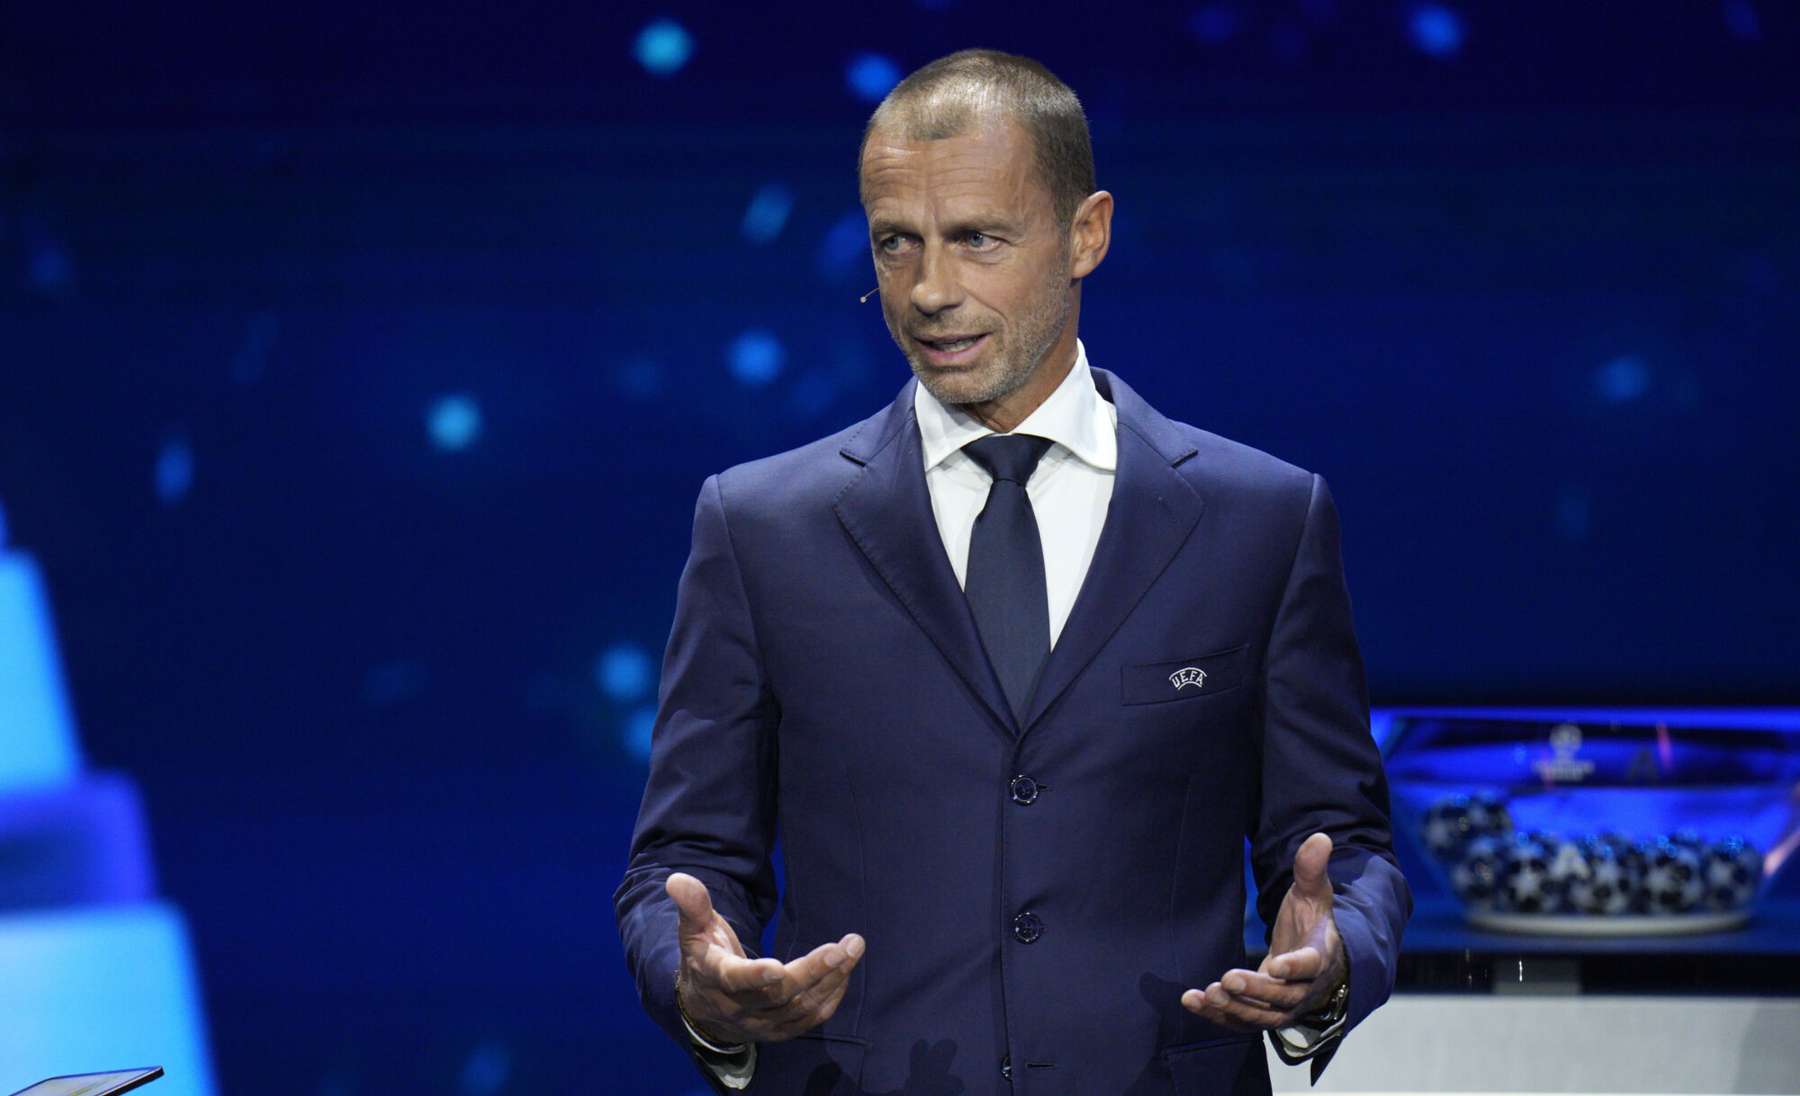 UEFA president Seferin